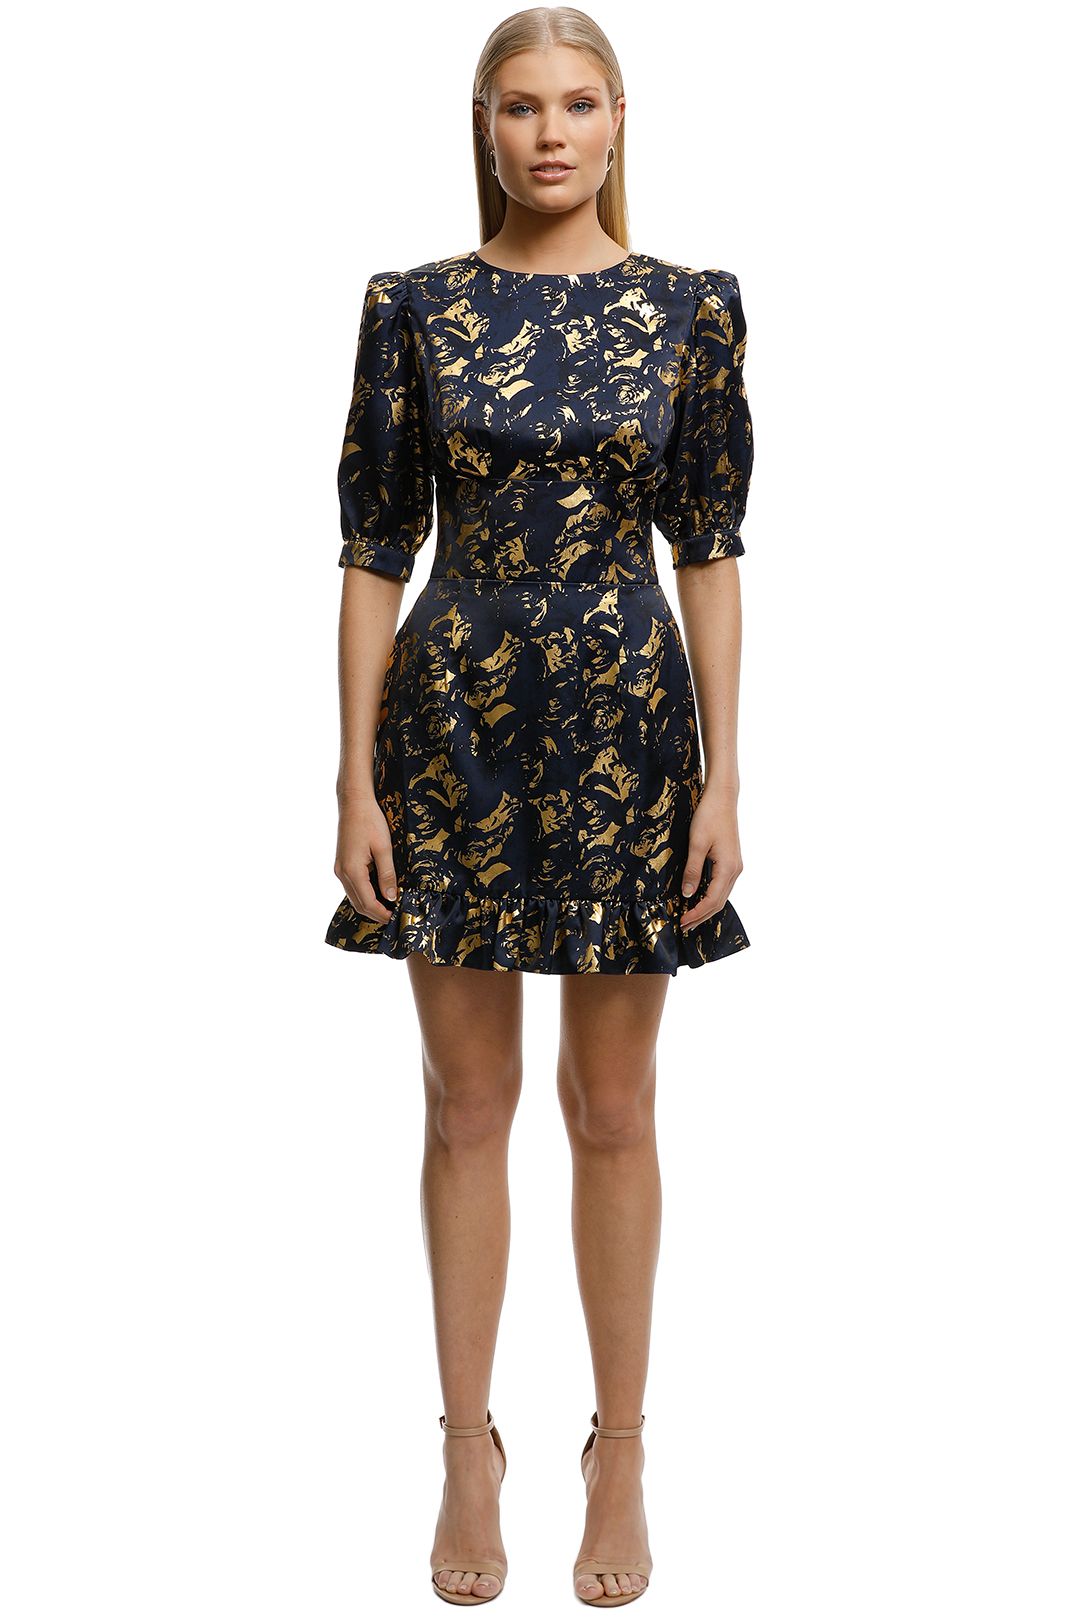 Misha-Collection- Havannah-Printed-Dress-Black-Gold-Front